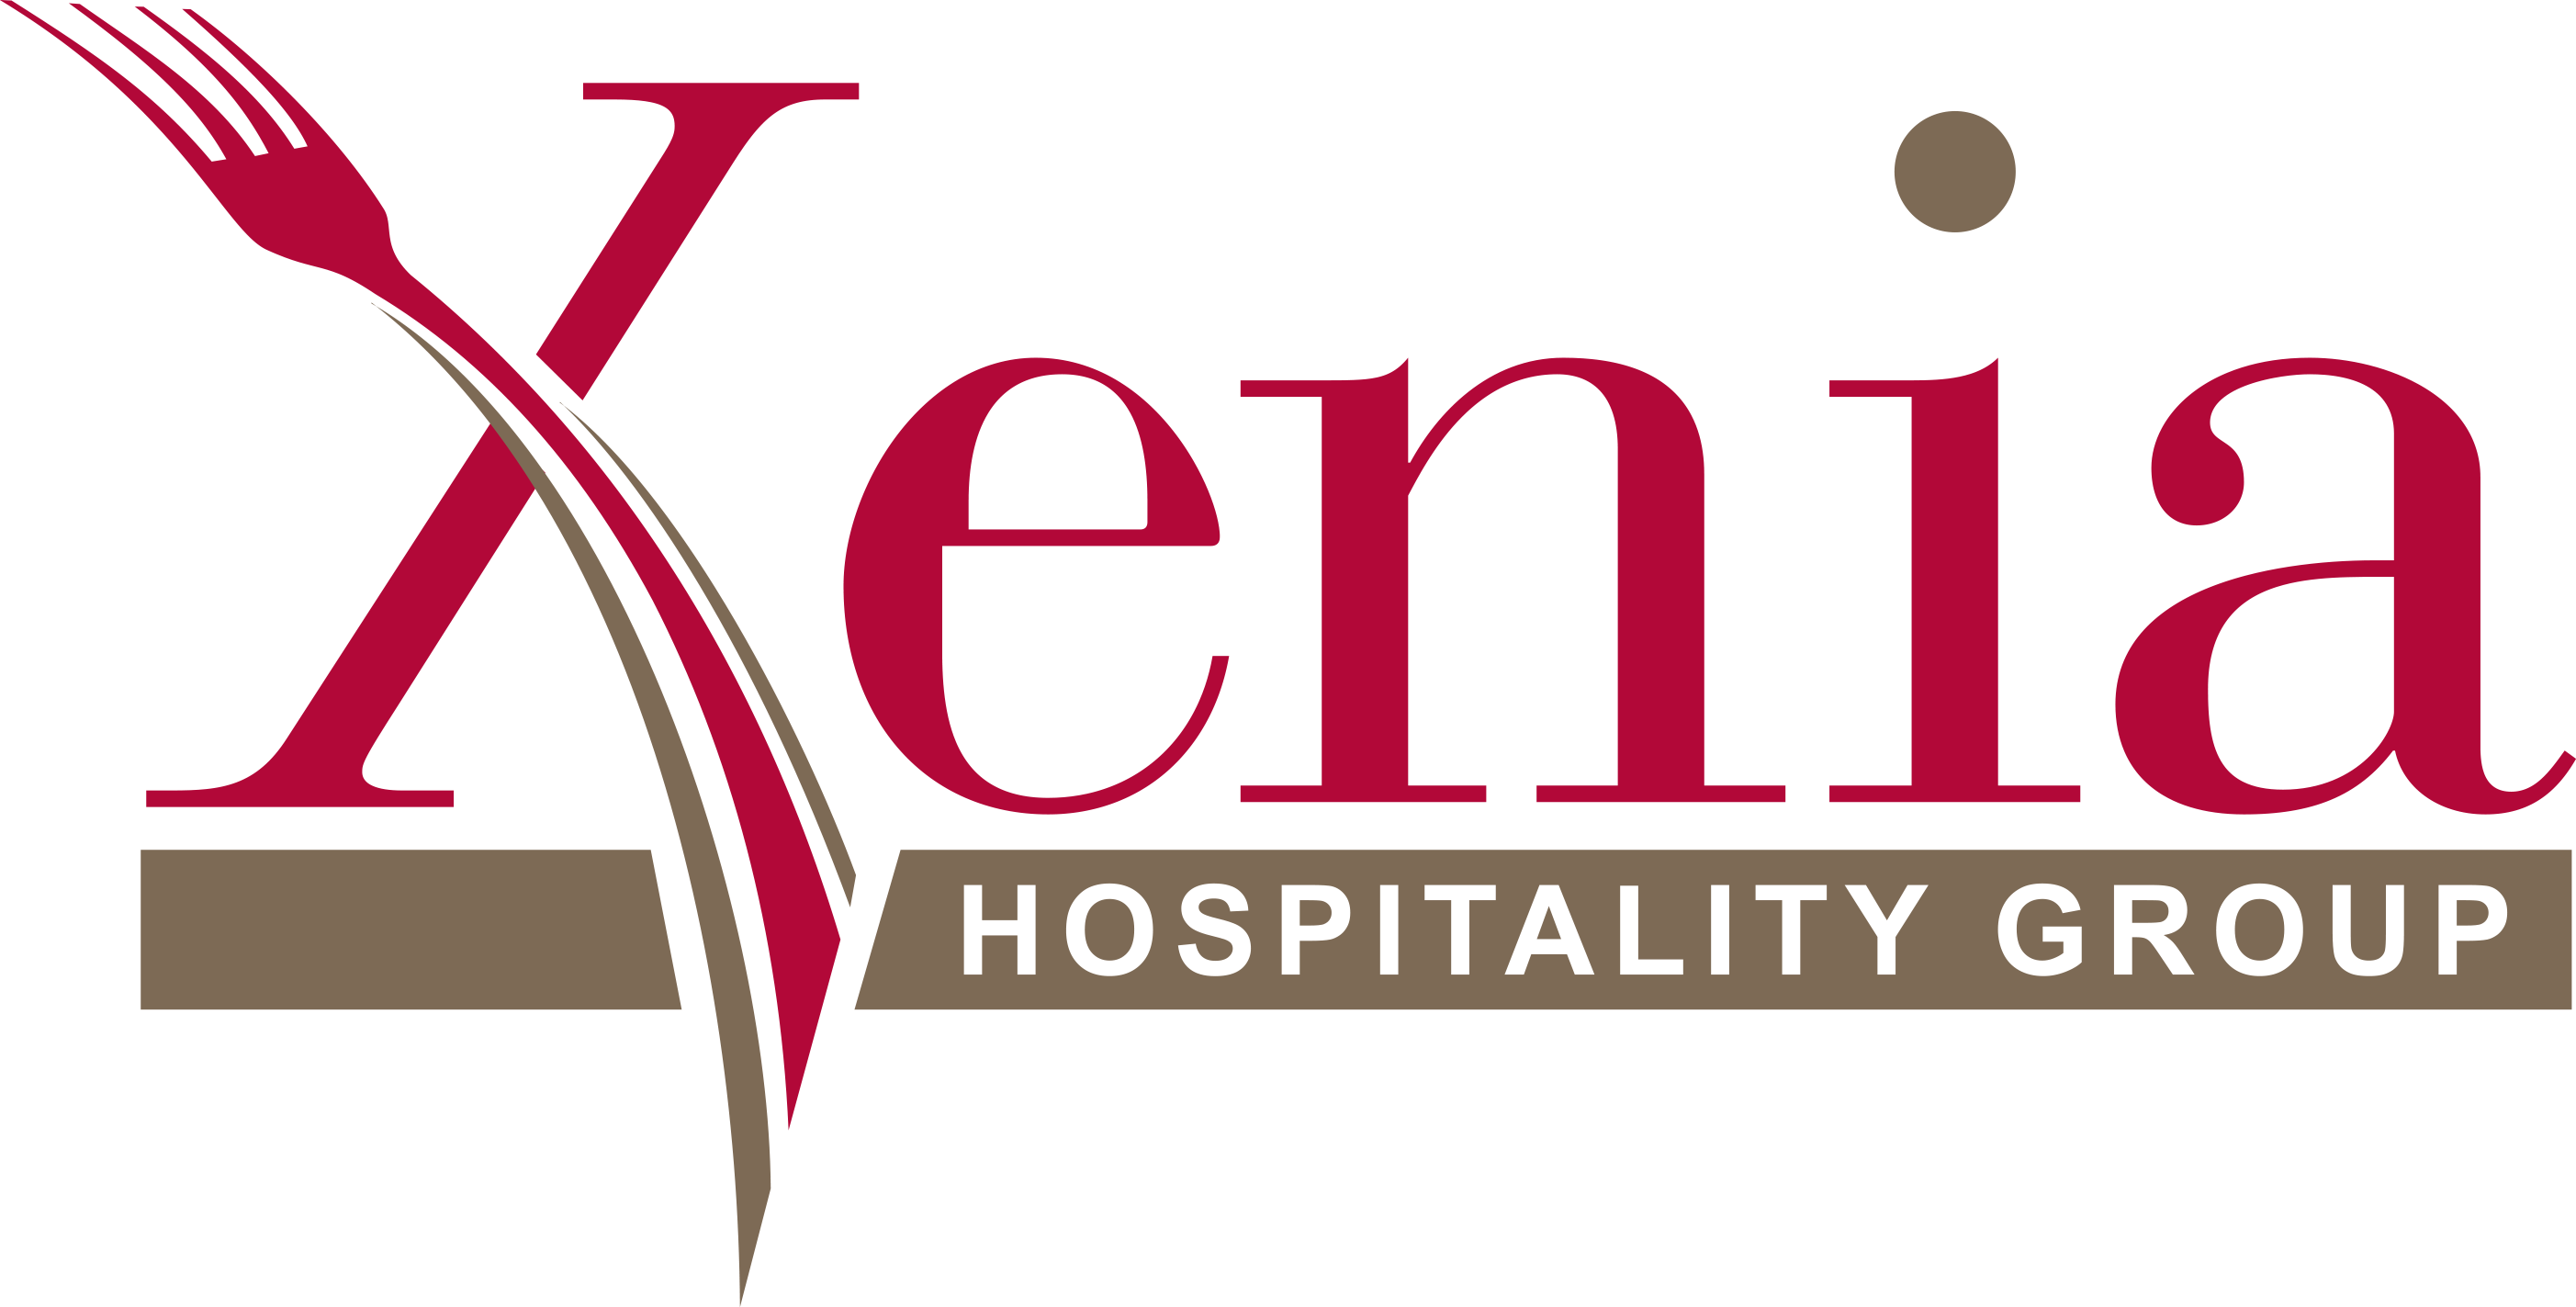 Xenia Hospitality Group logo